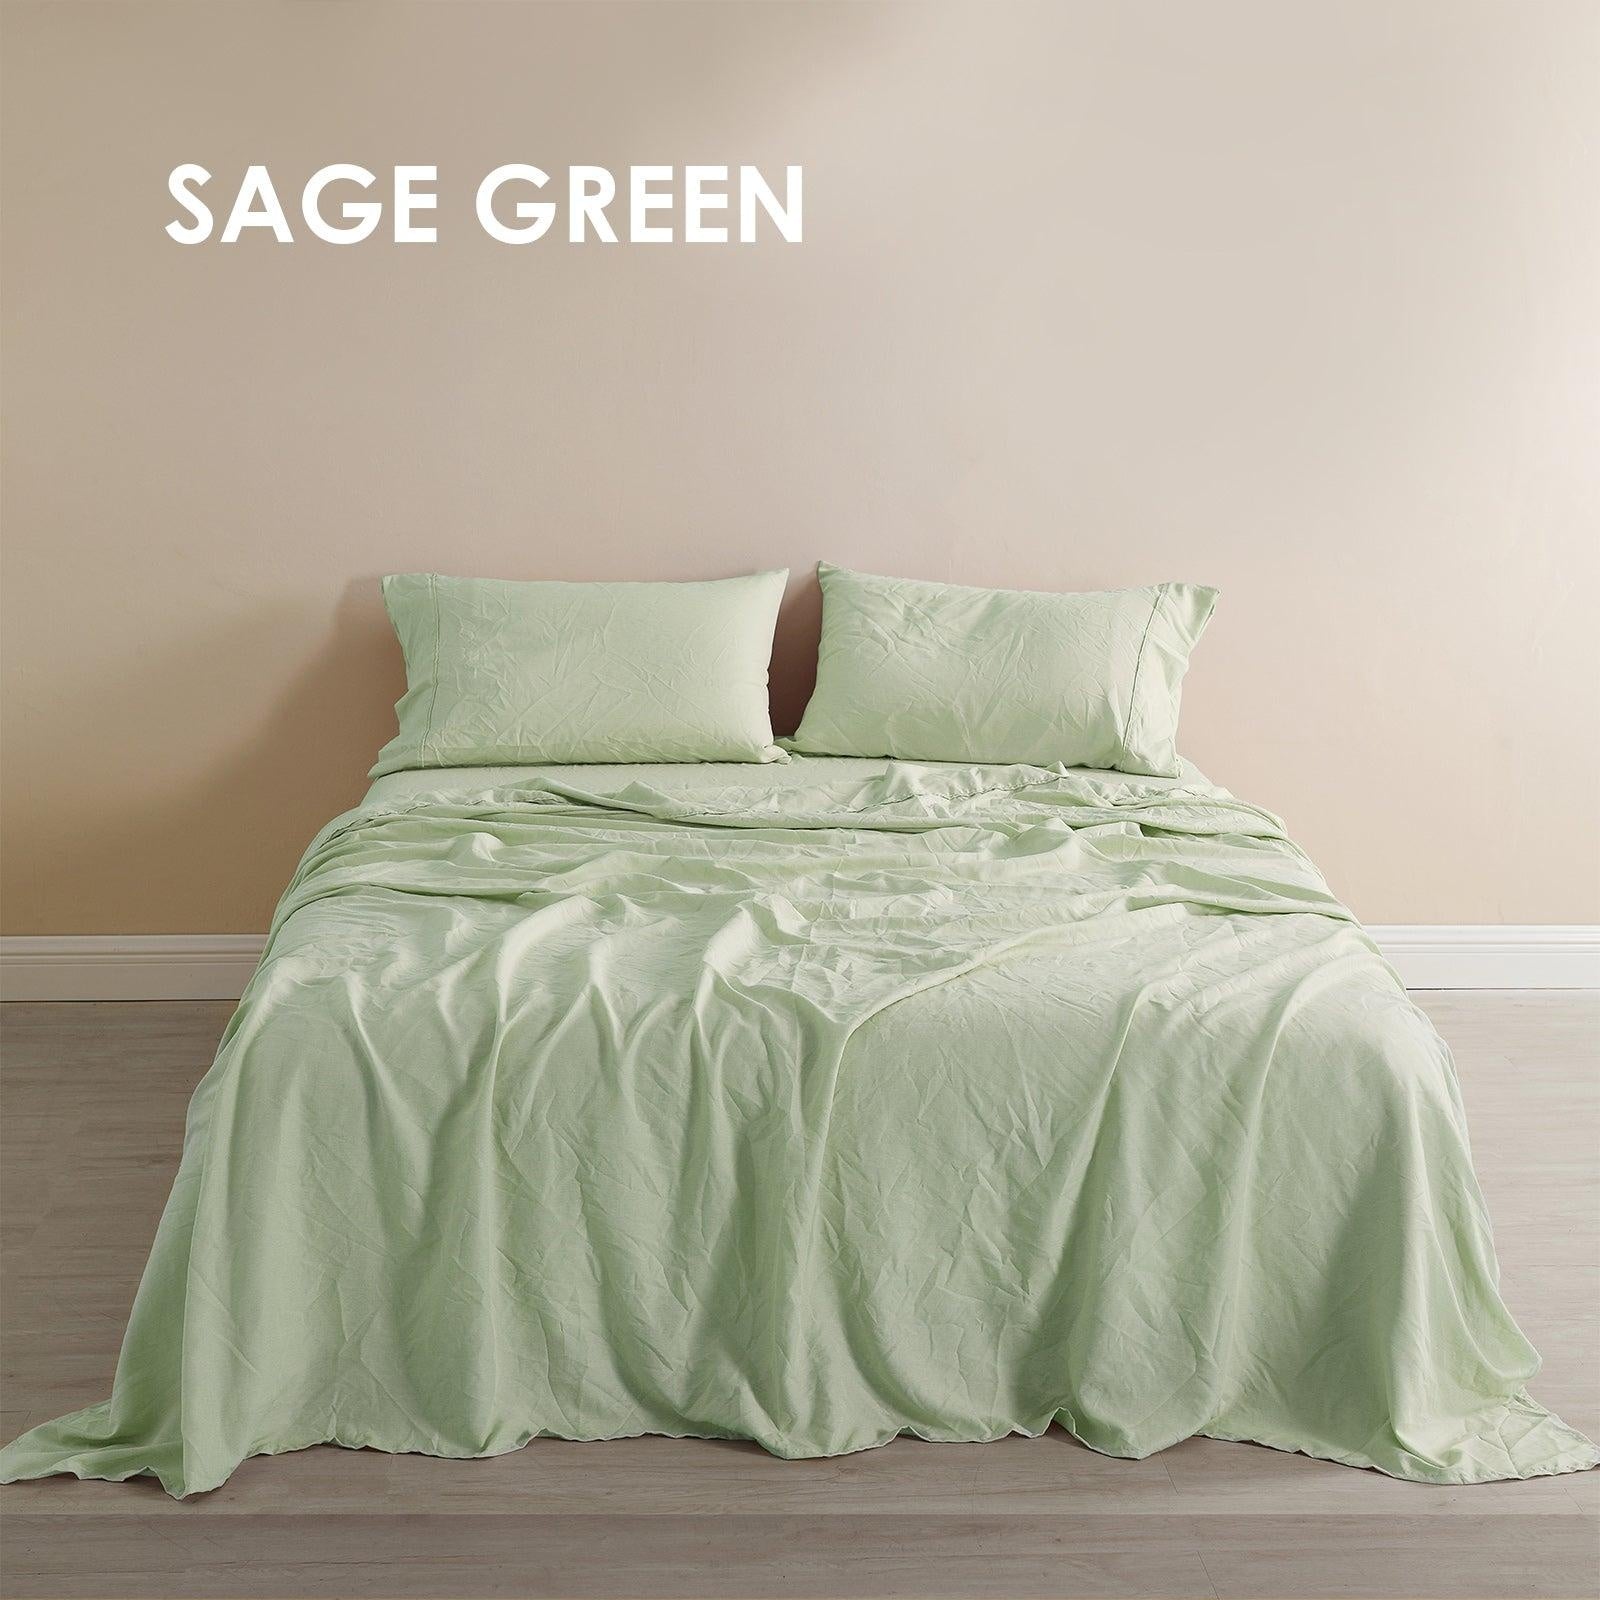 Royal Comfort Flax Linen Blend Sheet Set Bedding Luxury Breathable Ultra Soft Sage Green King Deals499